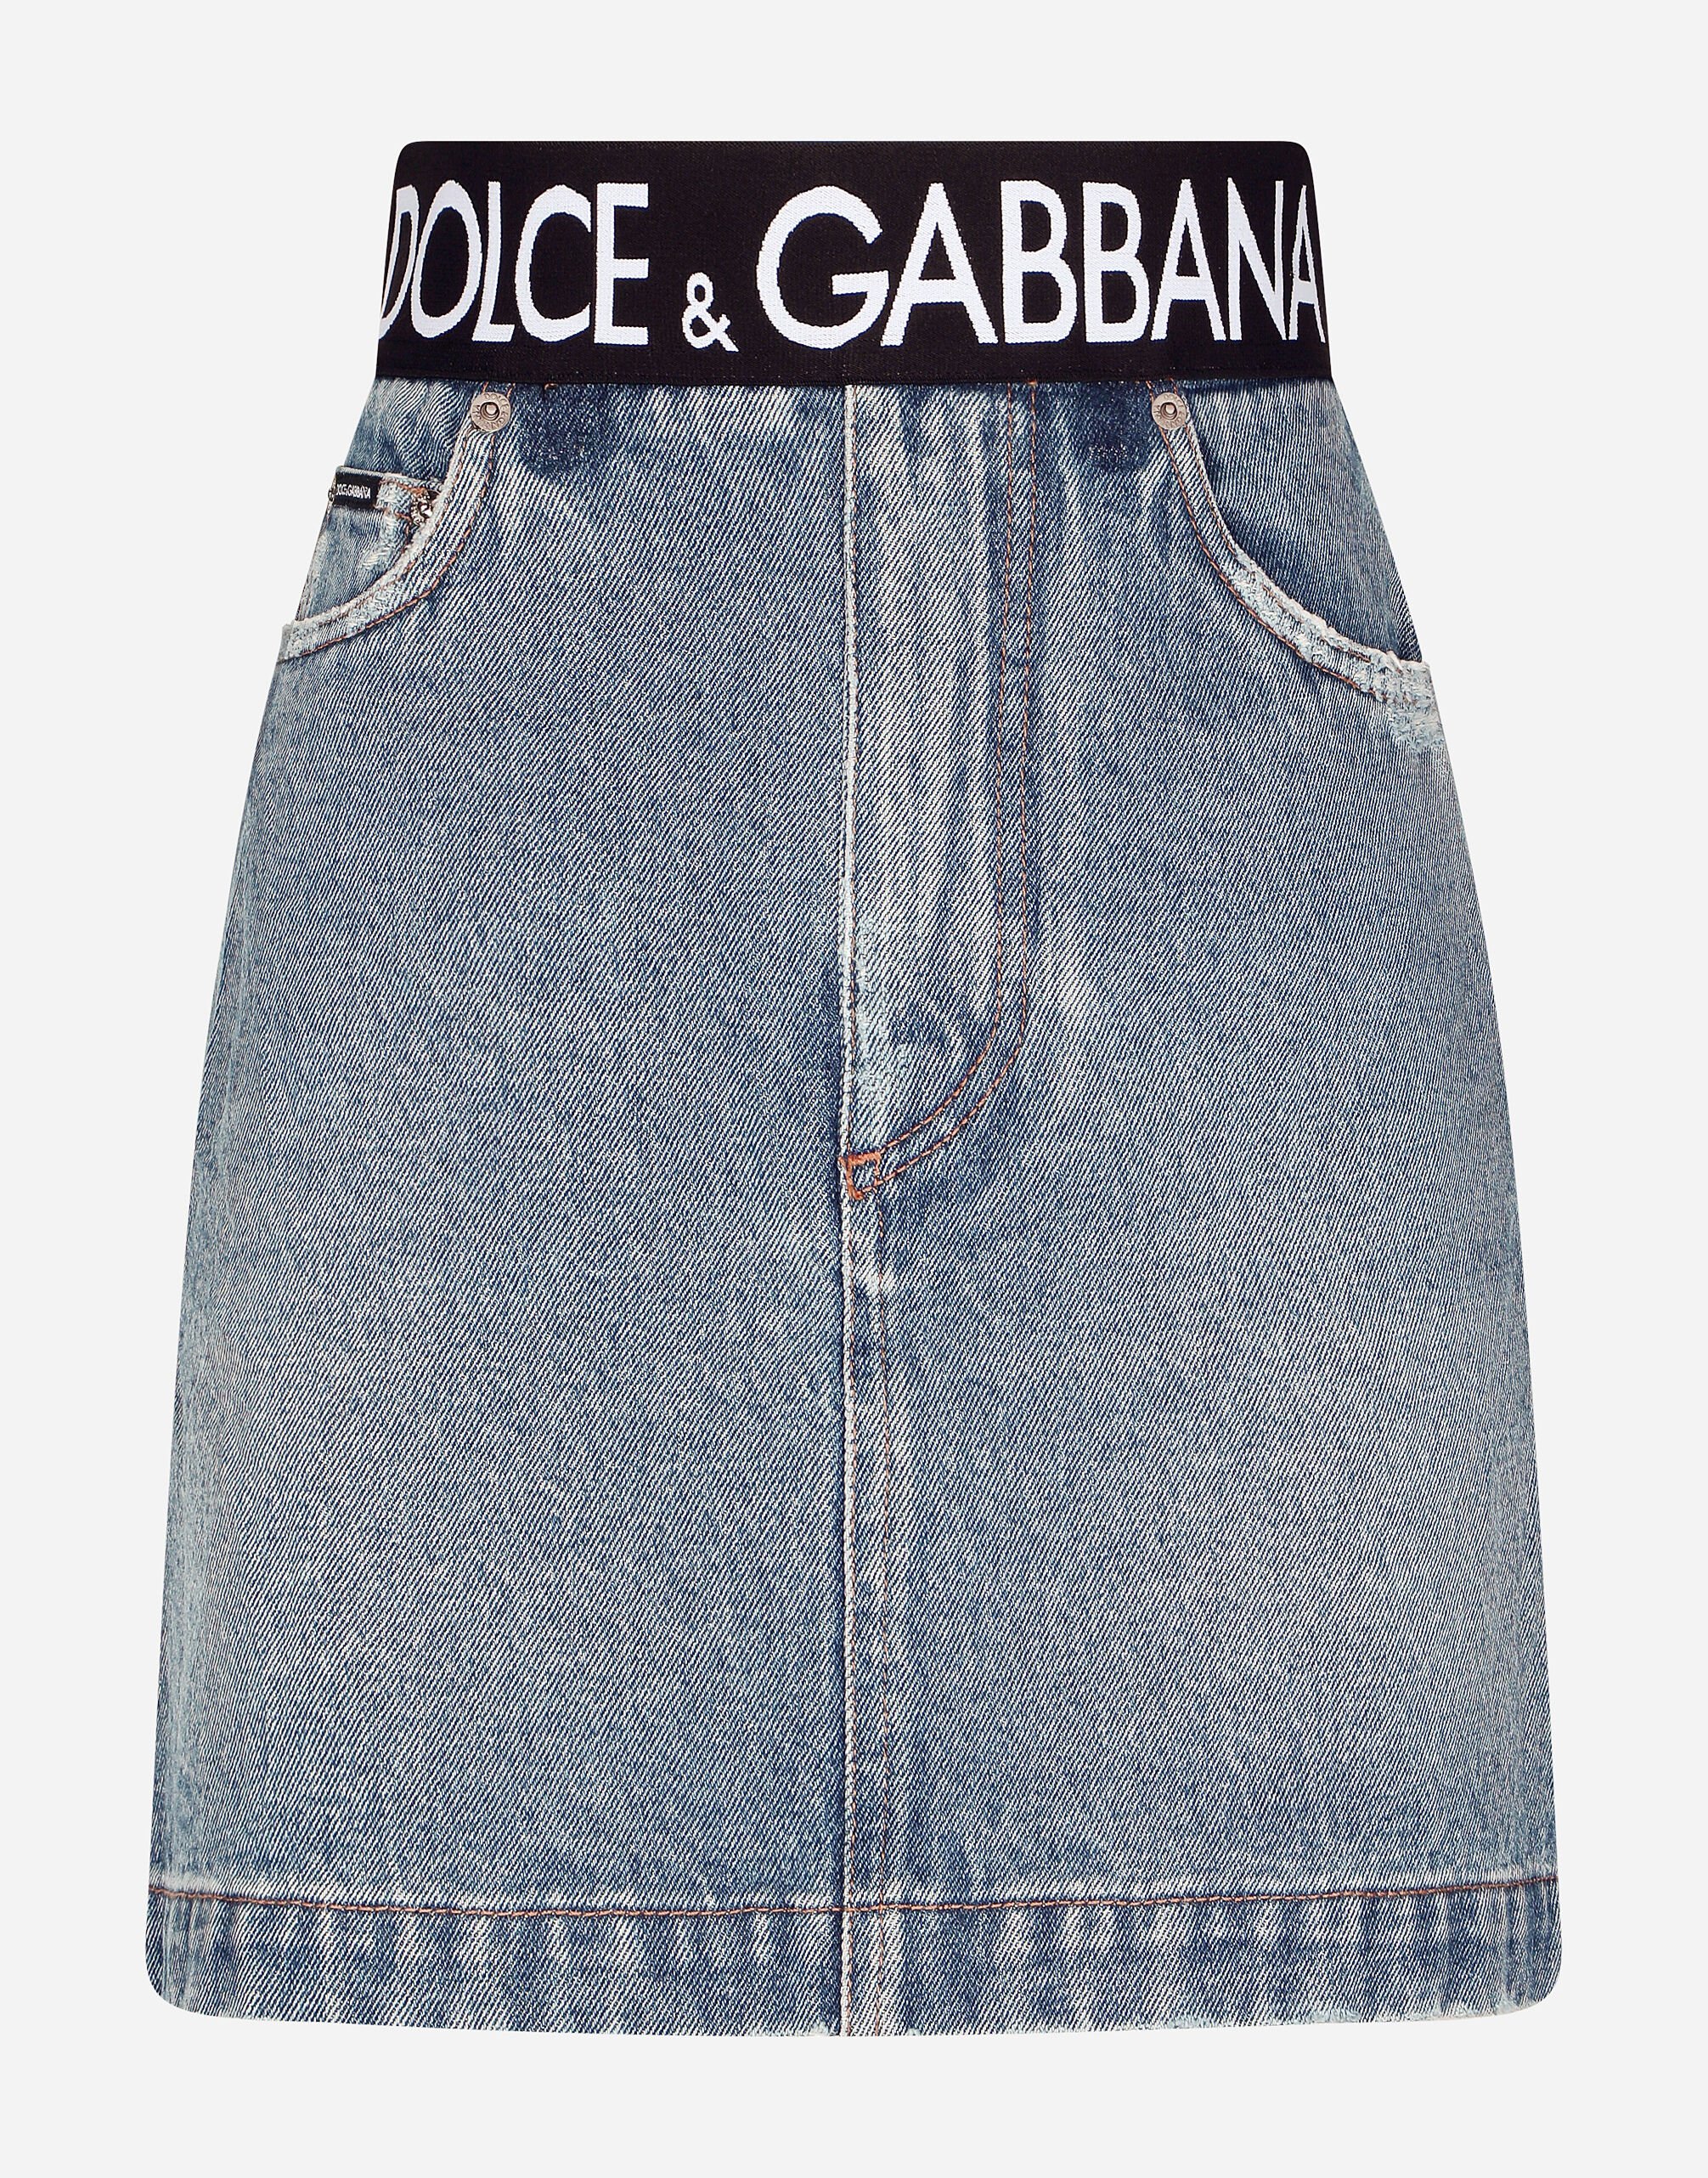 Dolce & Gabbana Short denim skirt with branded waistband Turquoise F4B7ITHLM7L